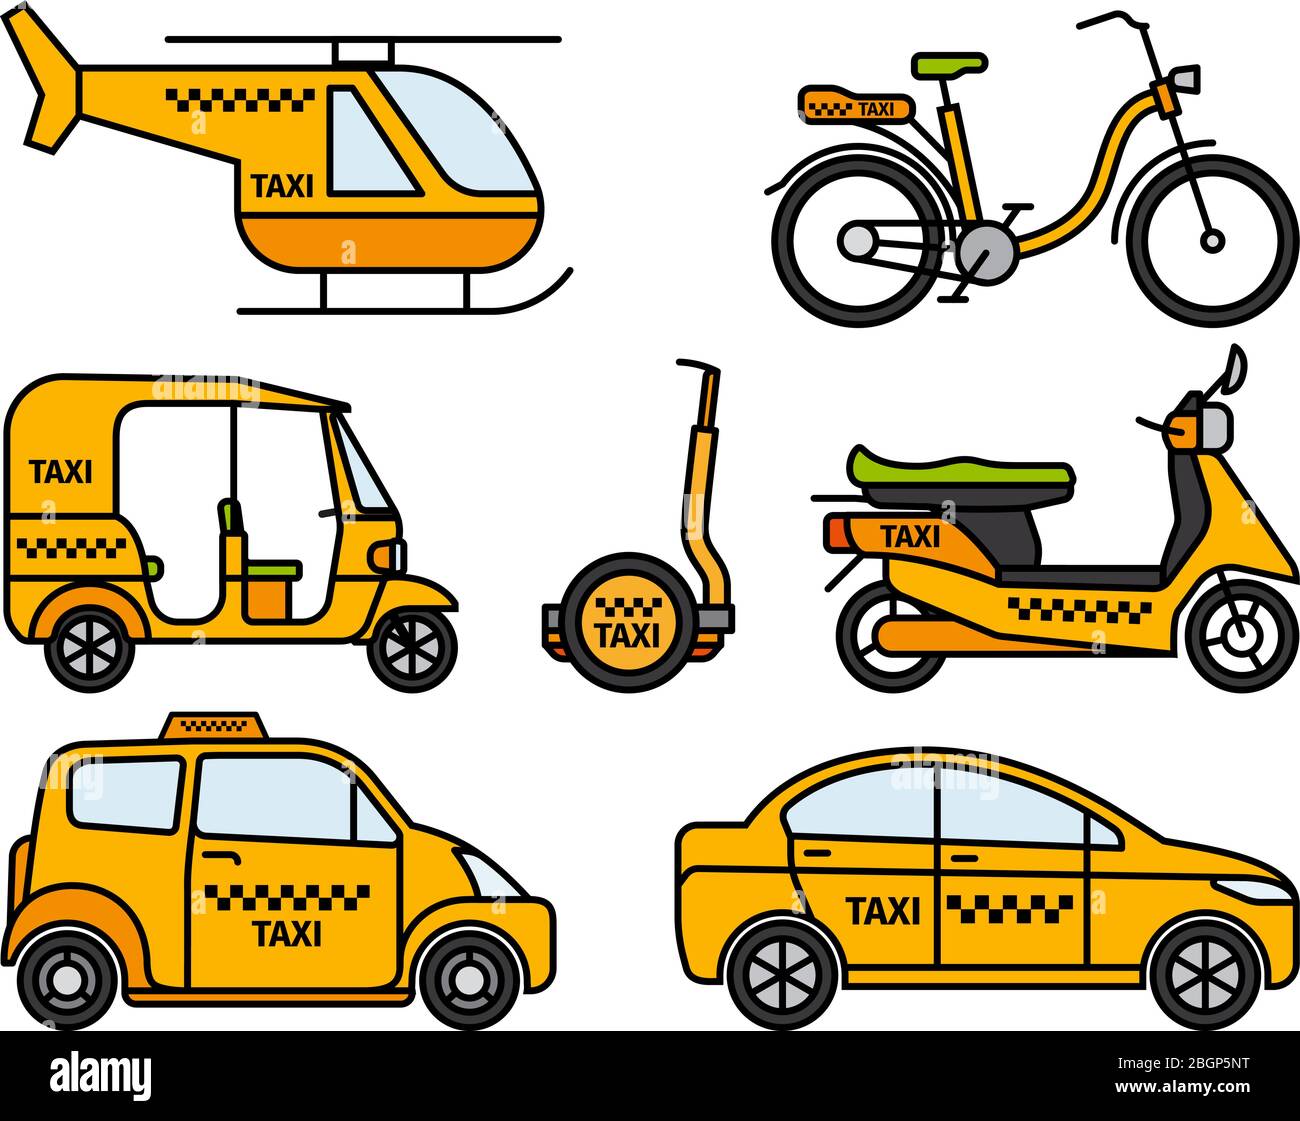 Taxi dünne Linien Symbole. Taxi und london Taxi, Baby Taxi und Tuk-Tuk Rikscha, Hubschrauber Taxi und Fahrrad Taxi. Vektorgrafik Stock Vektor